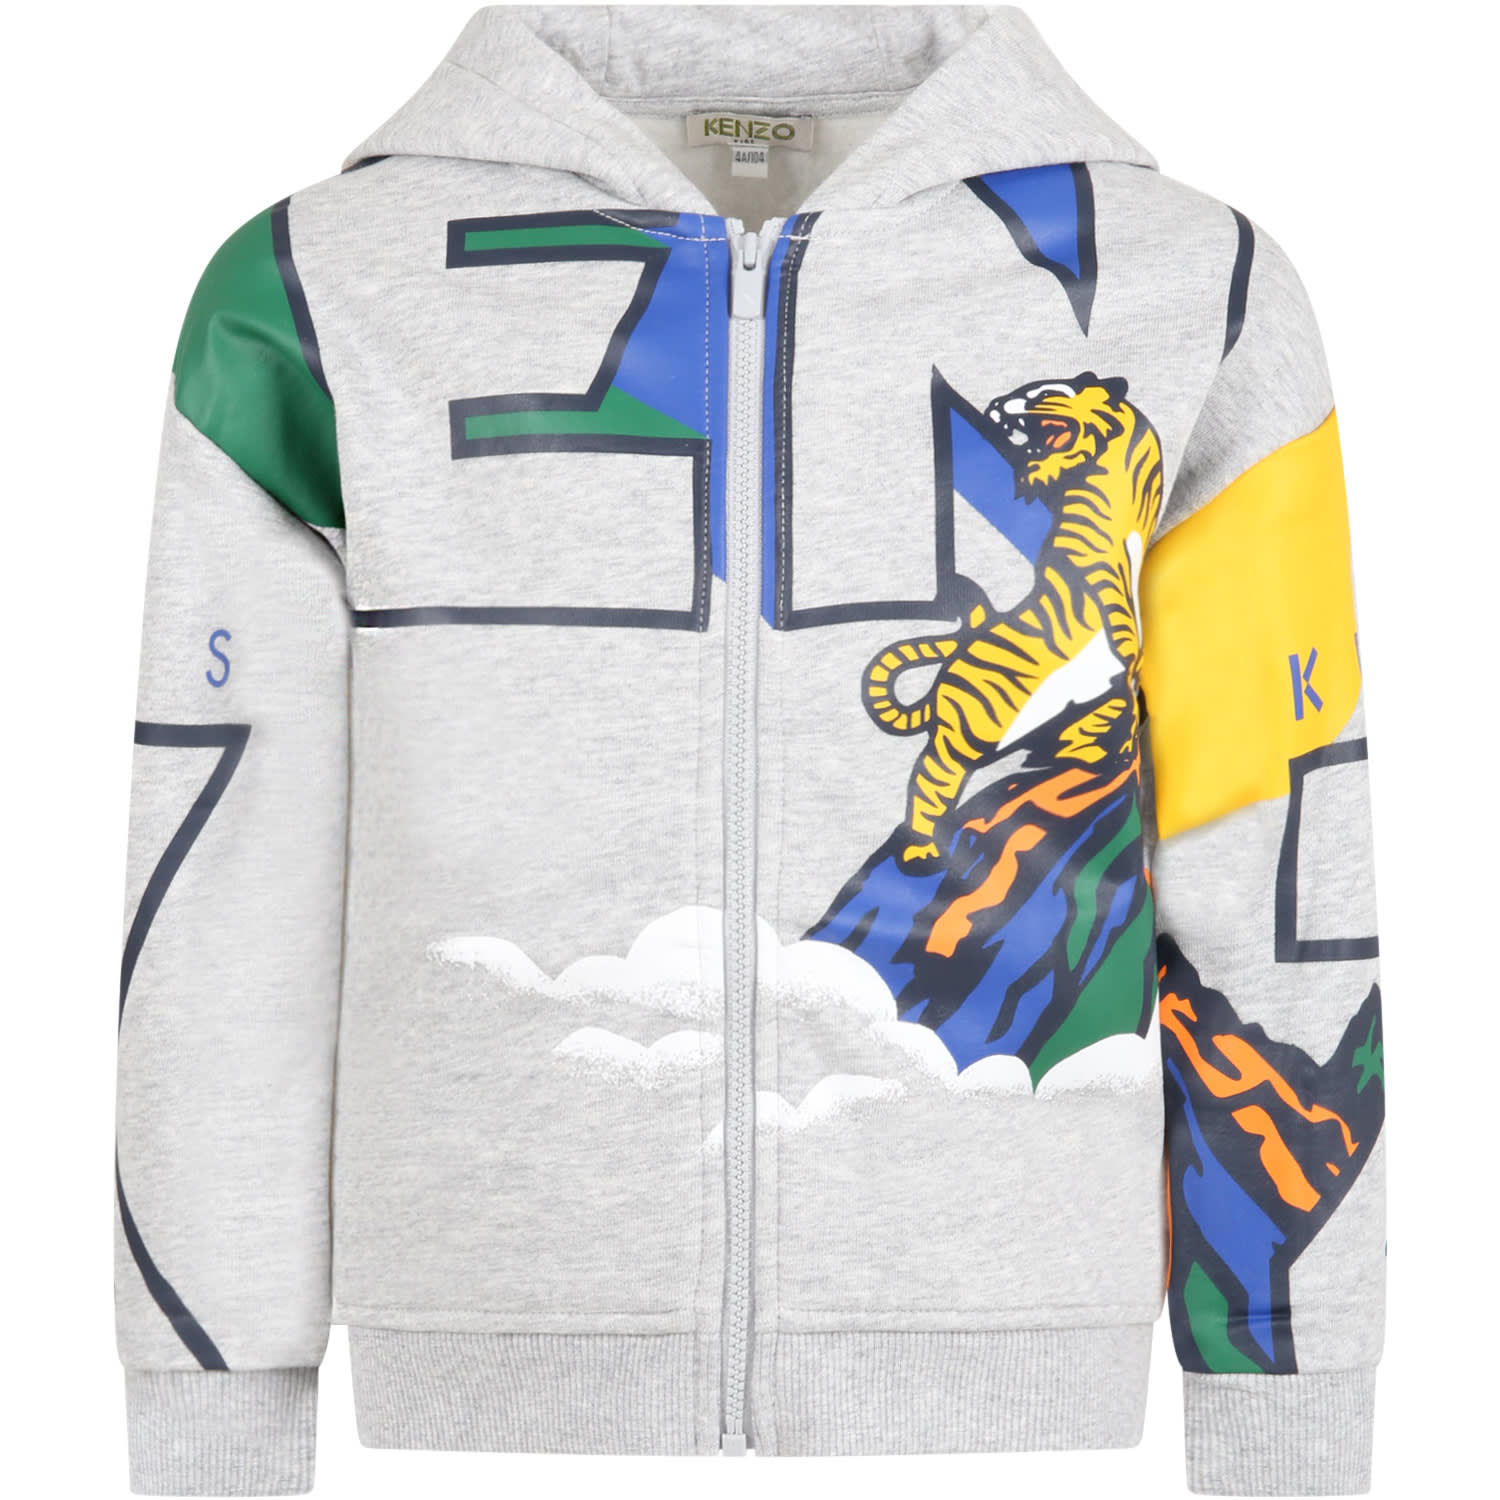 Kenzo Kids Grey Sweatshirt For Boy With Tigers